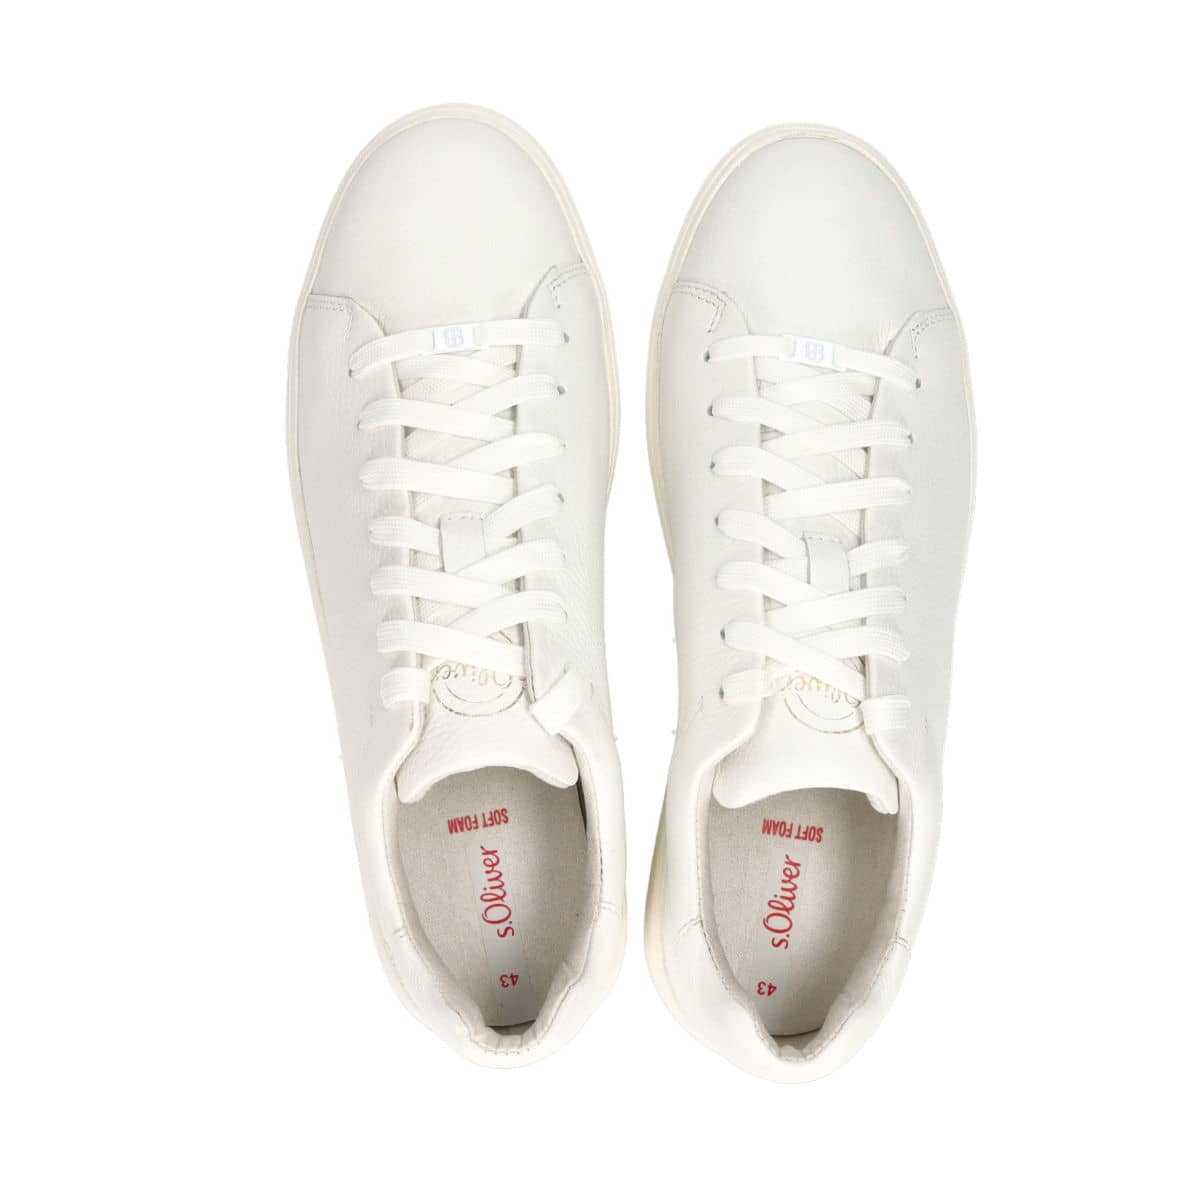 s.Oliver men's leather sneaker - white